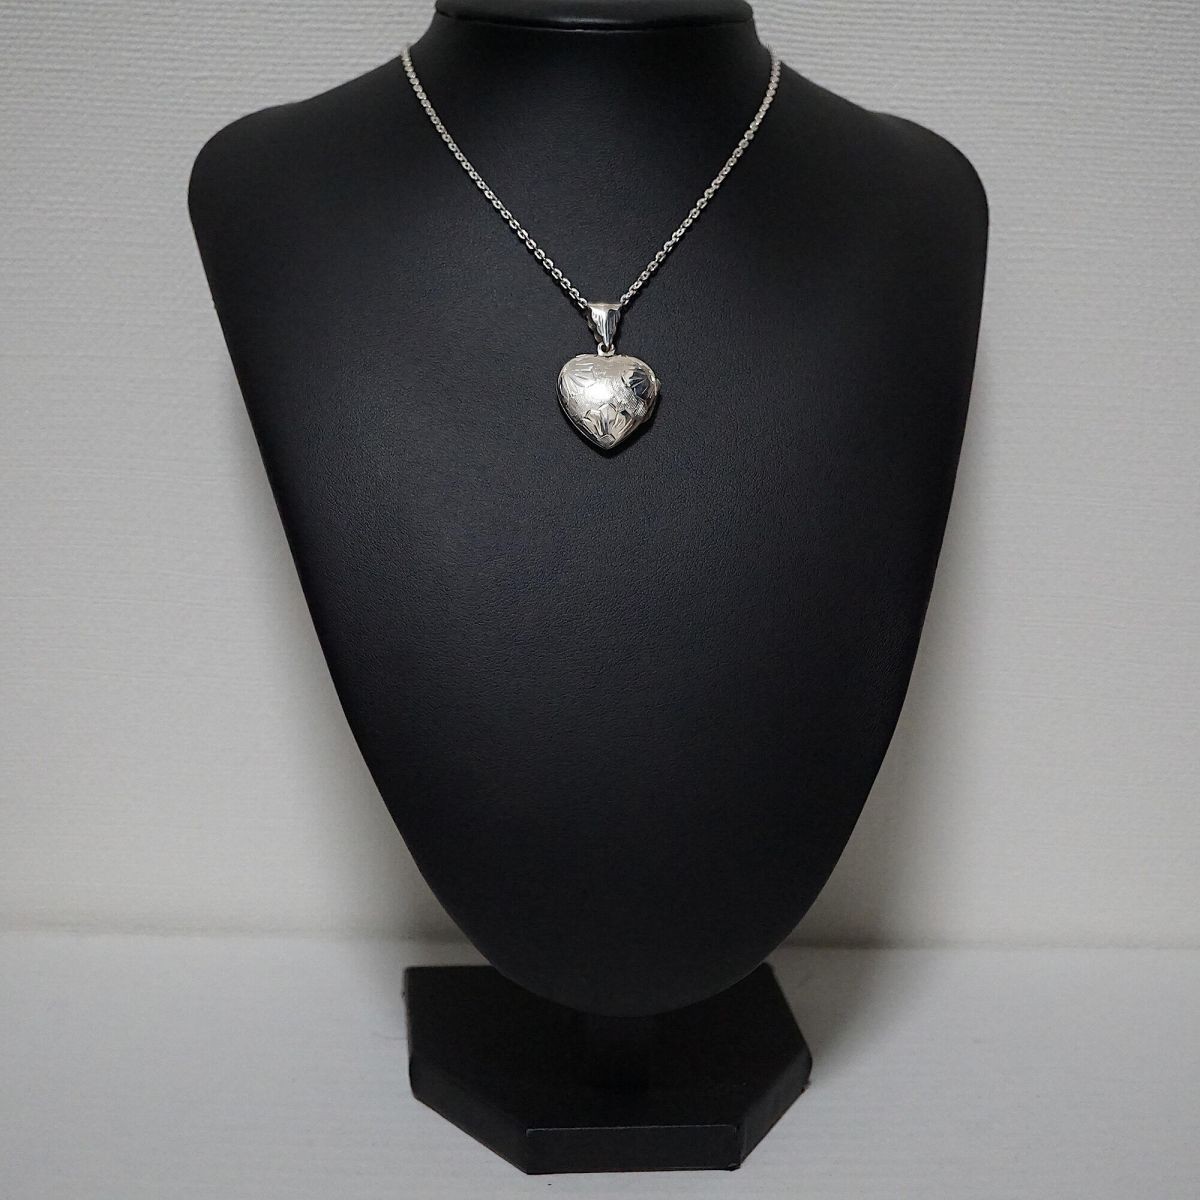  Rocket pendant memorial pendant Heart silver 925 necklace pill case pendant silver .. go in free shipping y0611